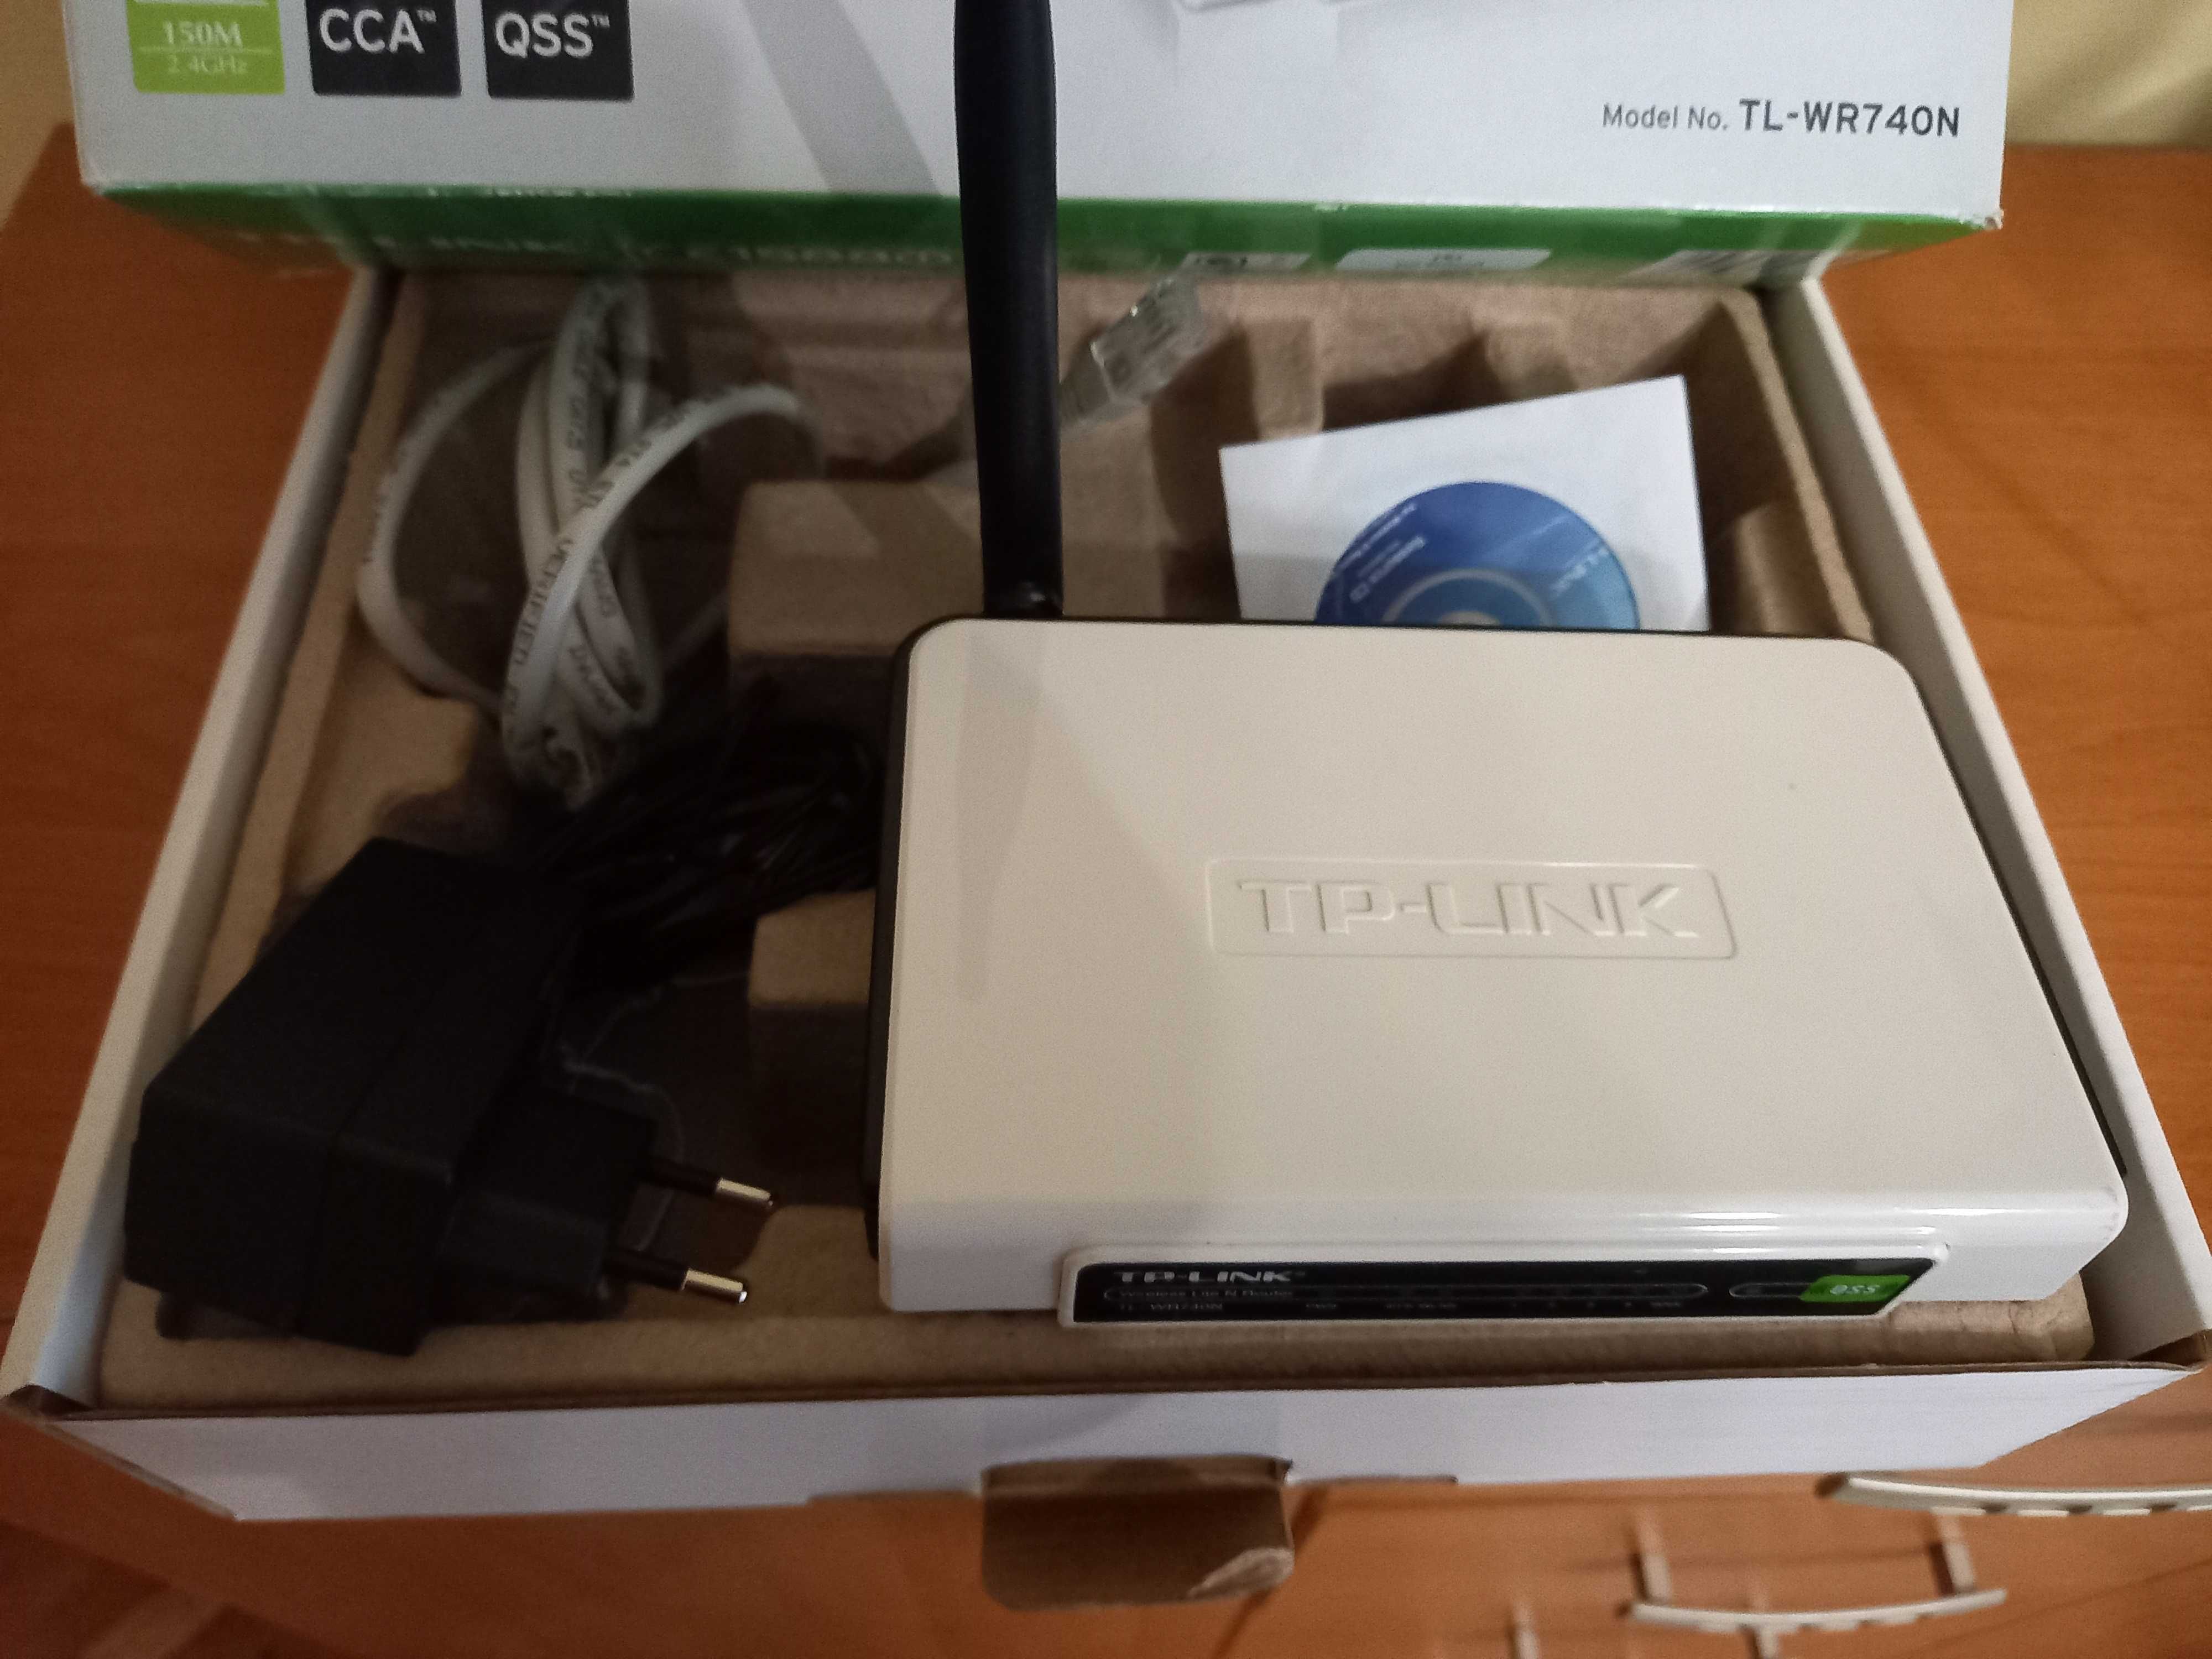 router TP-LINK TL-WR740N